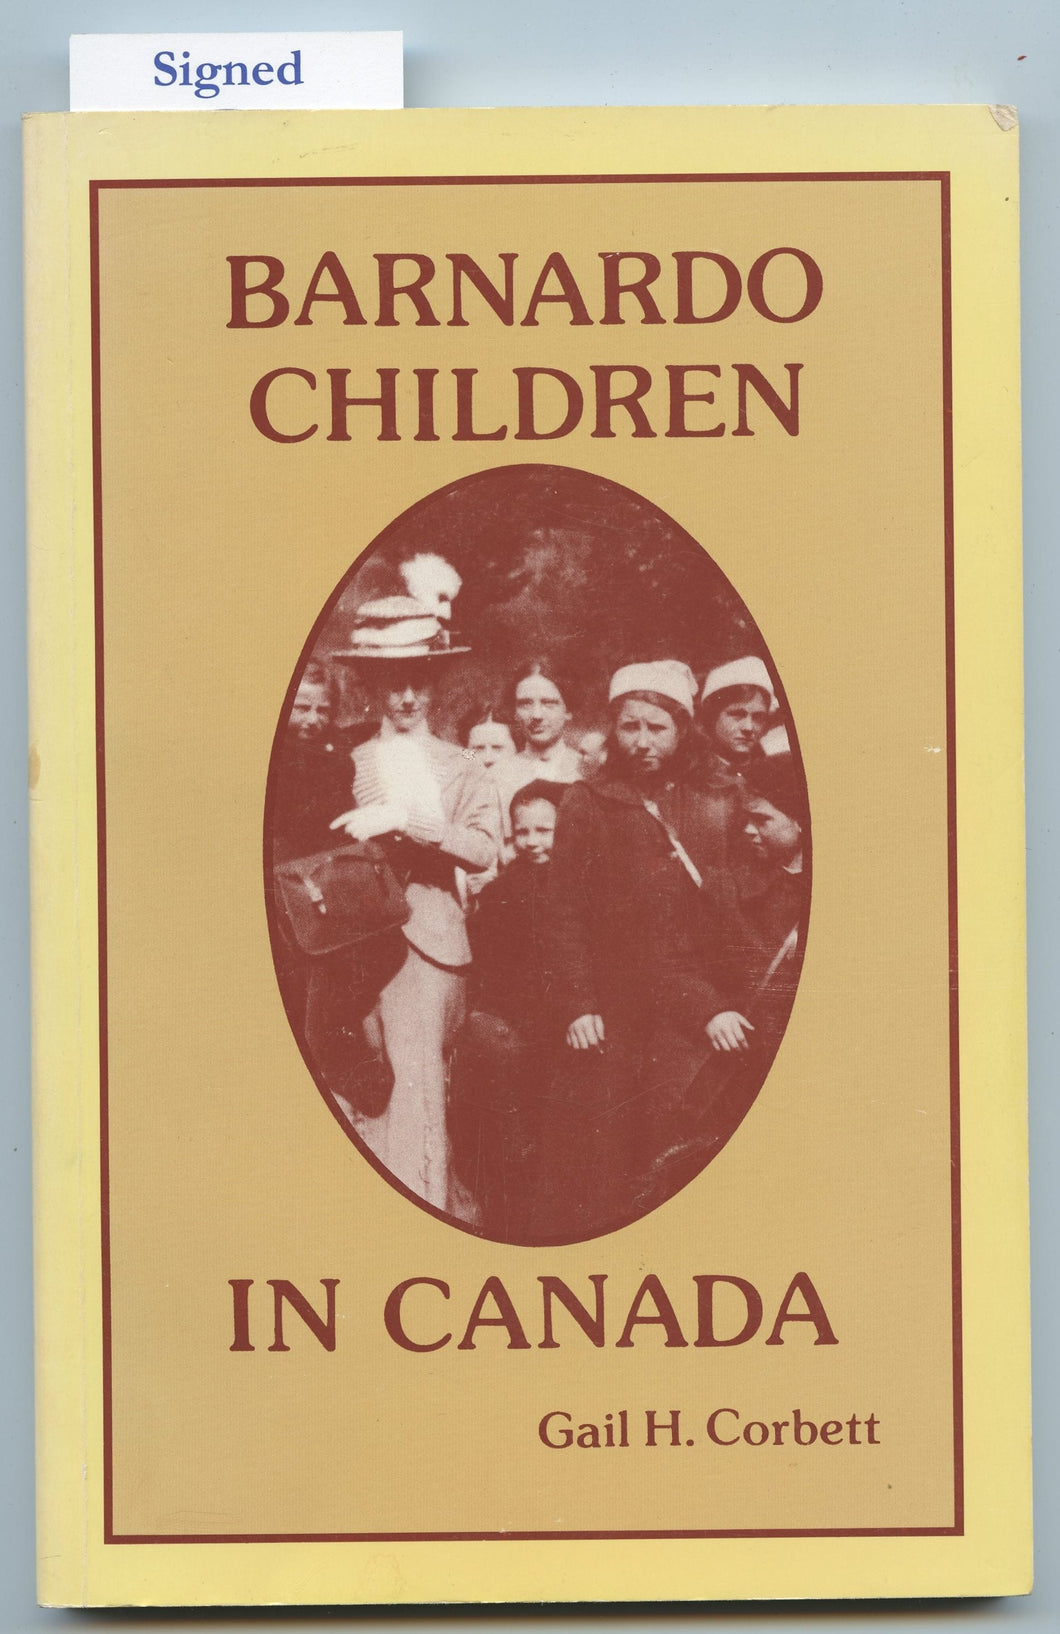 Barnardo Childen in Canada